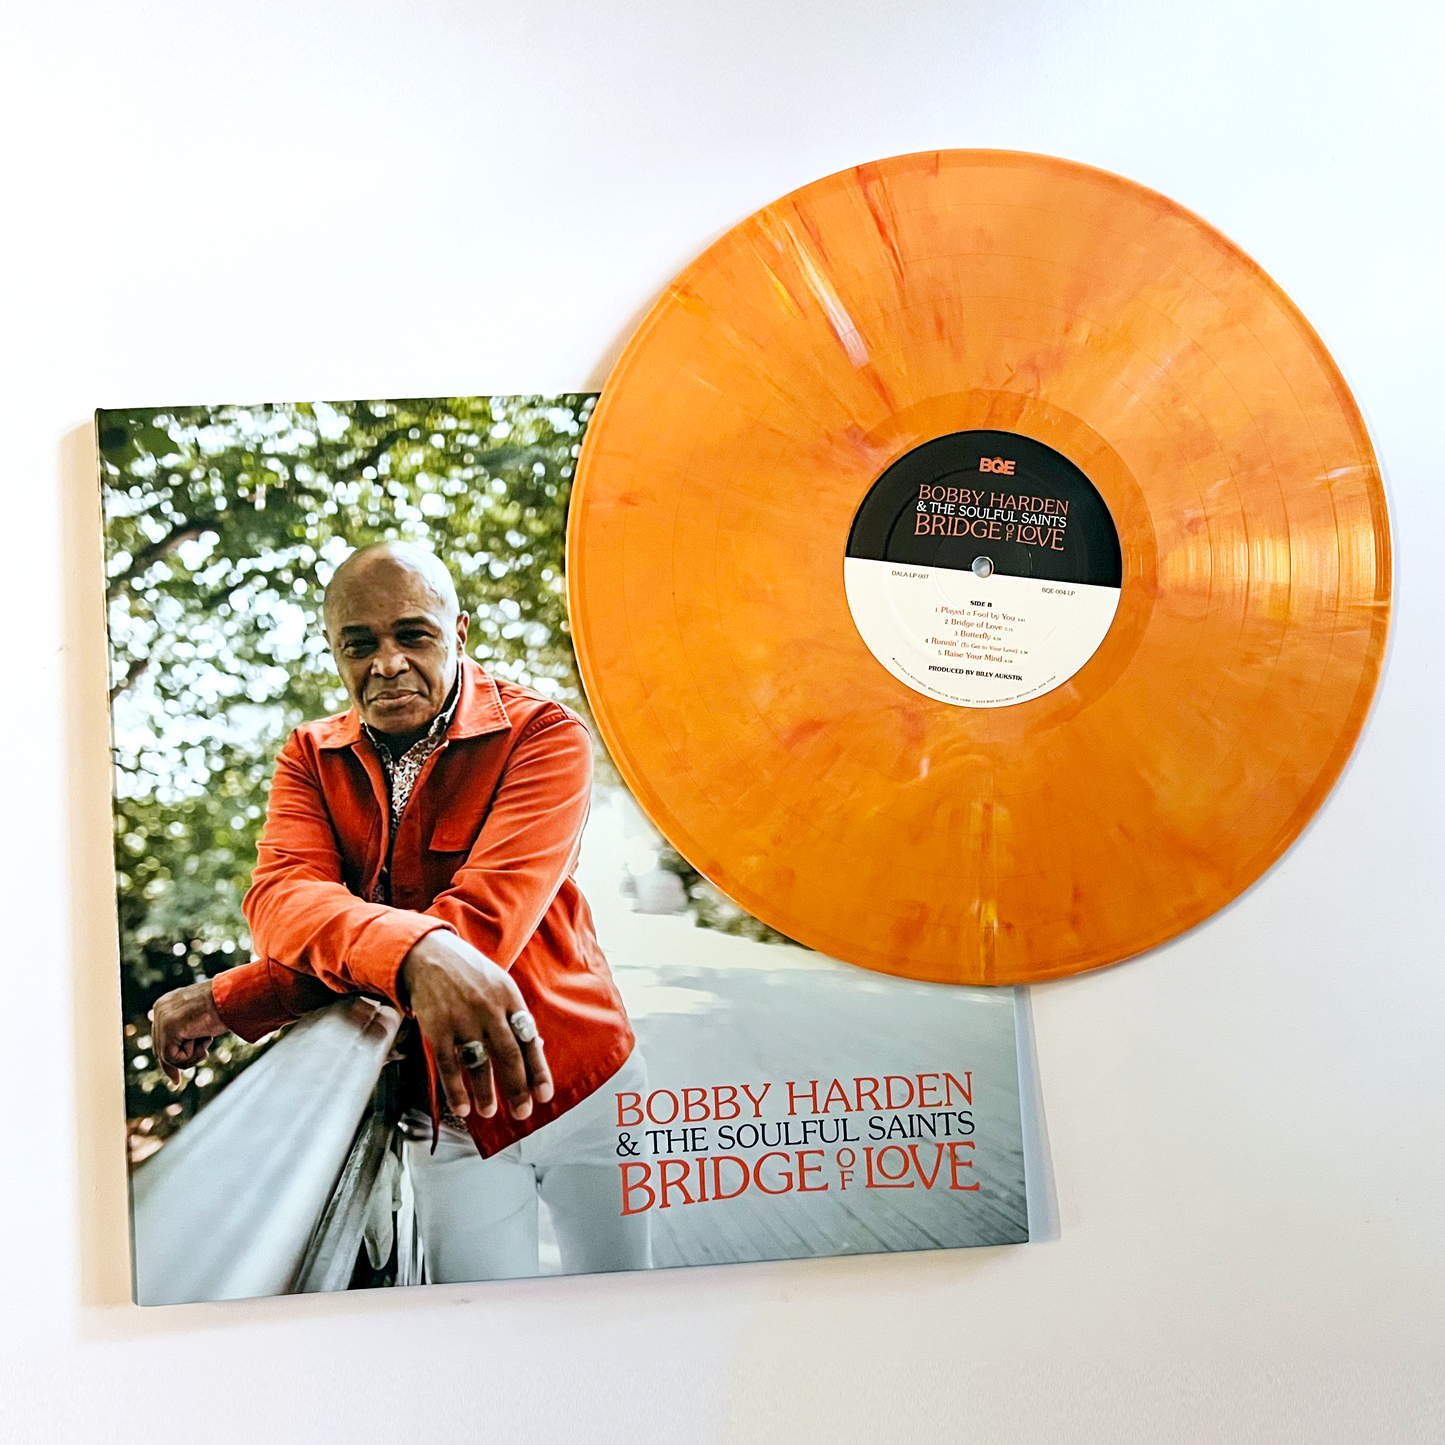 Bobby Harden & The Soulful Saints "Bridge of Love" LP